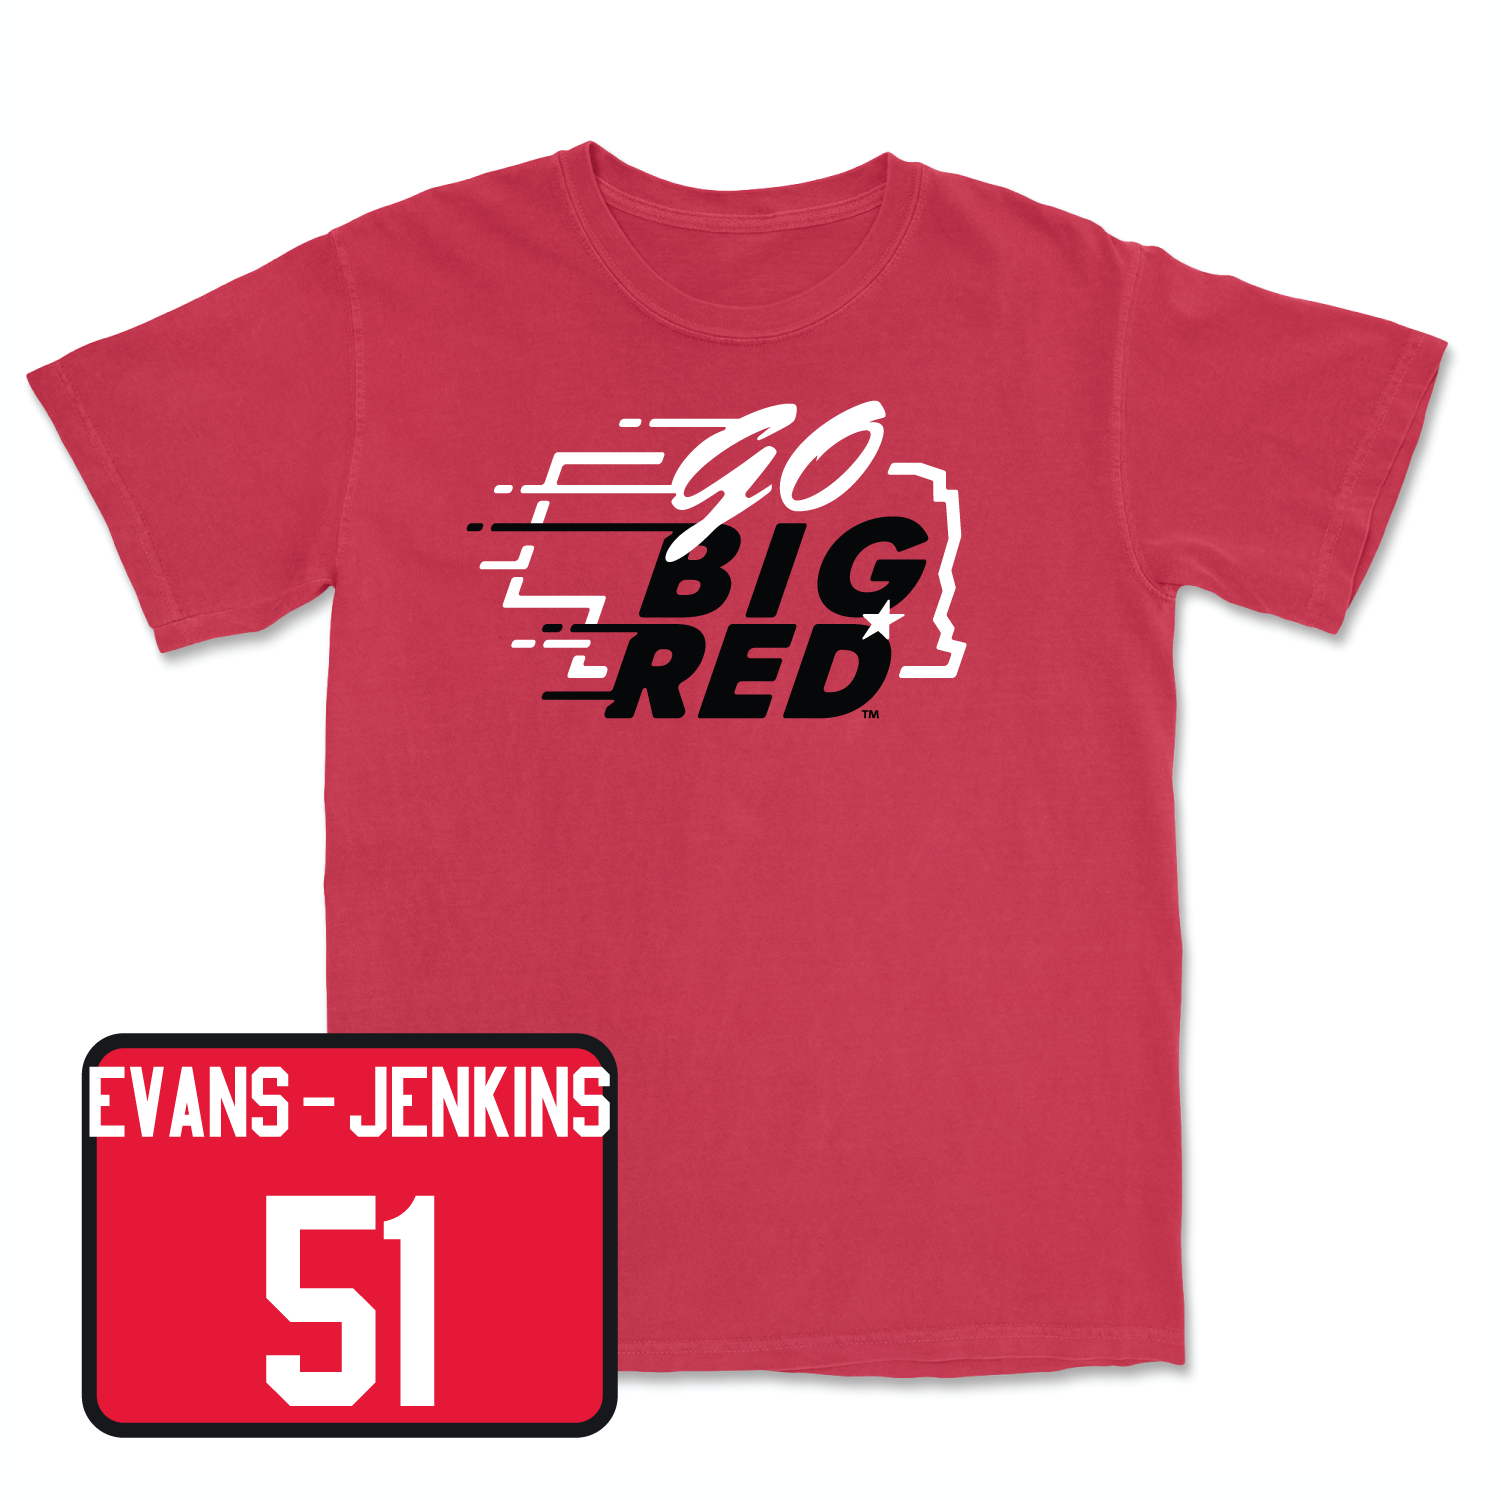 Red Football GBR Tee 6 3X-Large / Justin Evans-Jenkins | #51